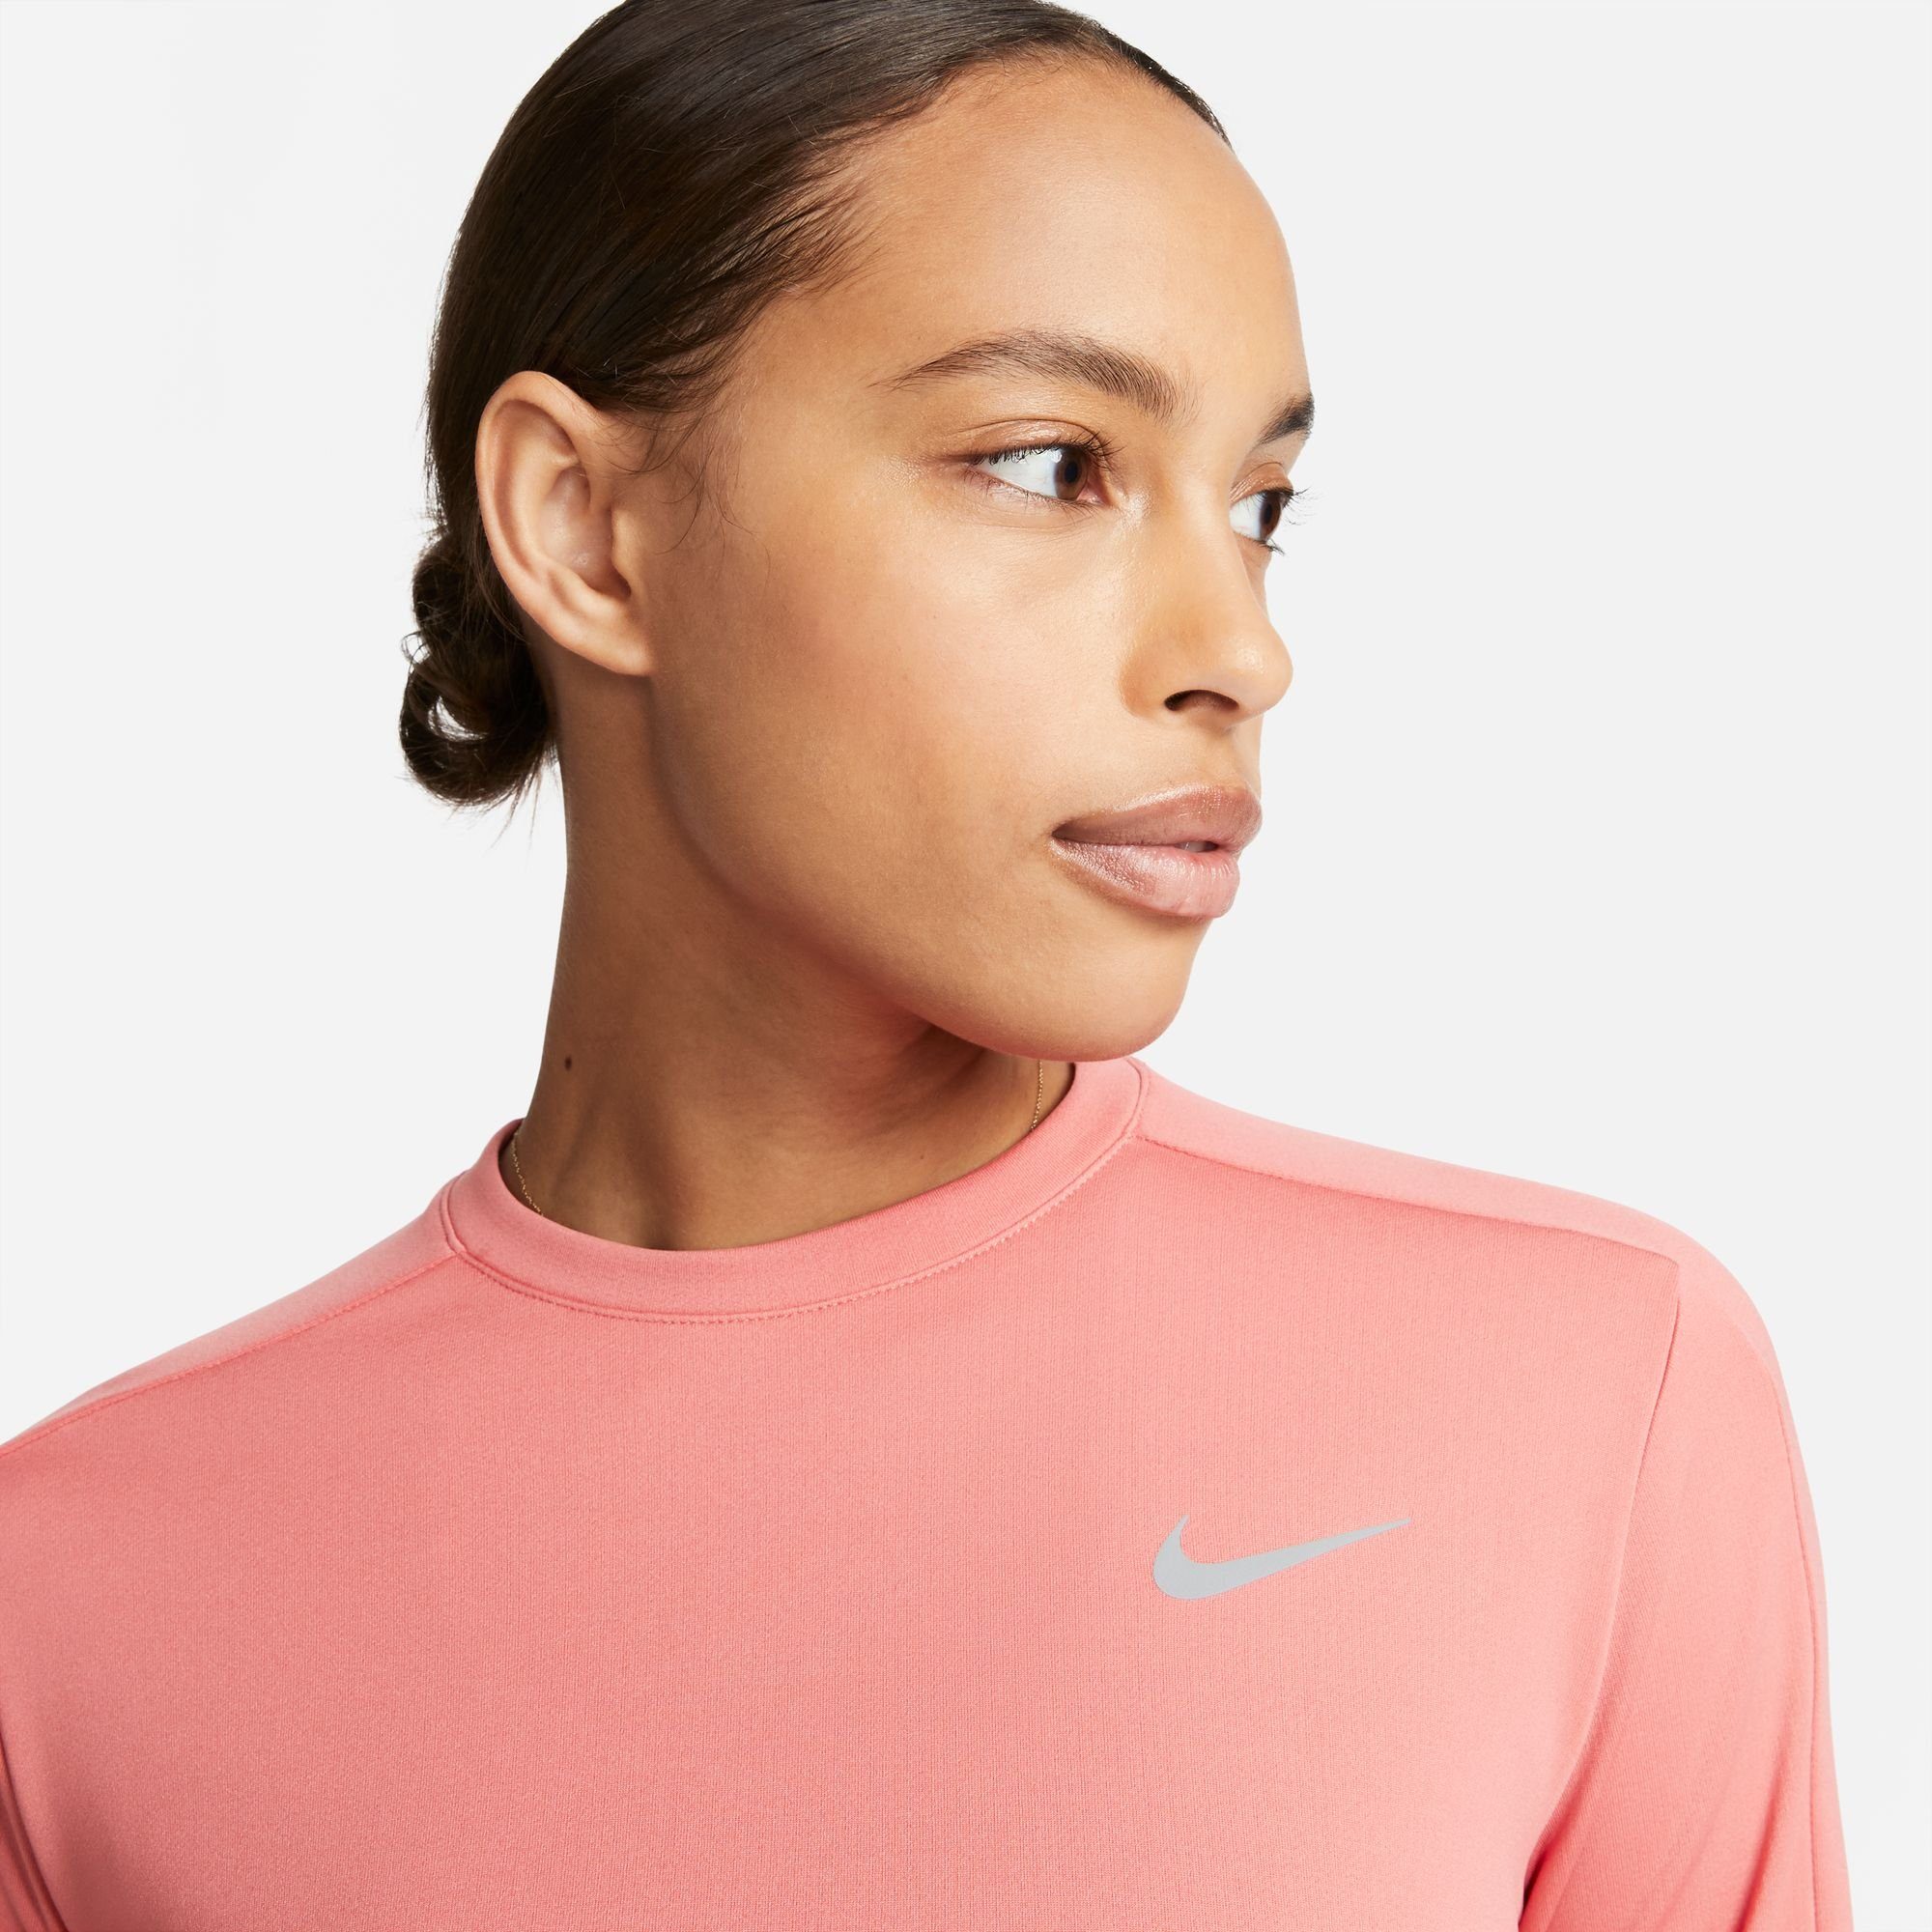 WOMEN'S SILV RUNNING Nike DRI-FIT ADOBE/REFLECTIVE CREW-NECK TOP Laufshirt